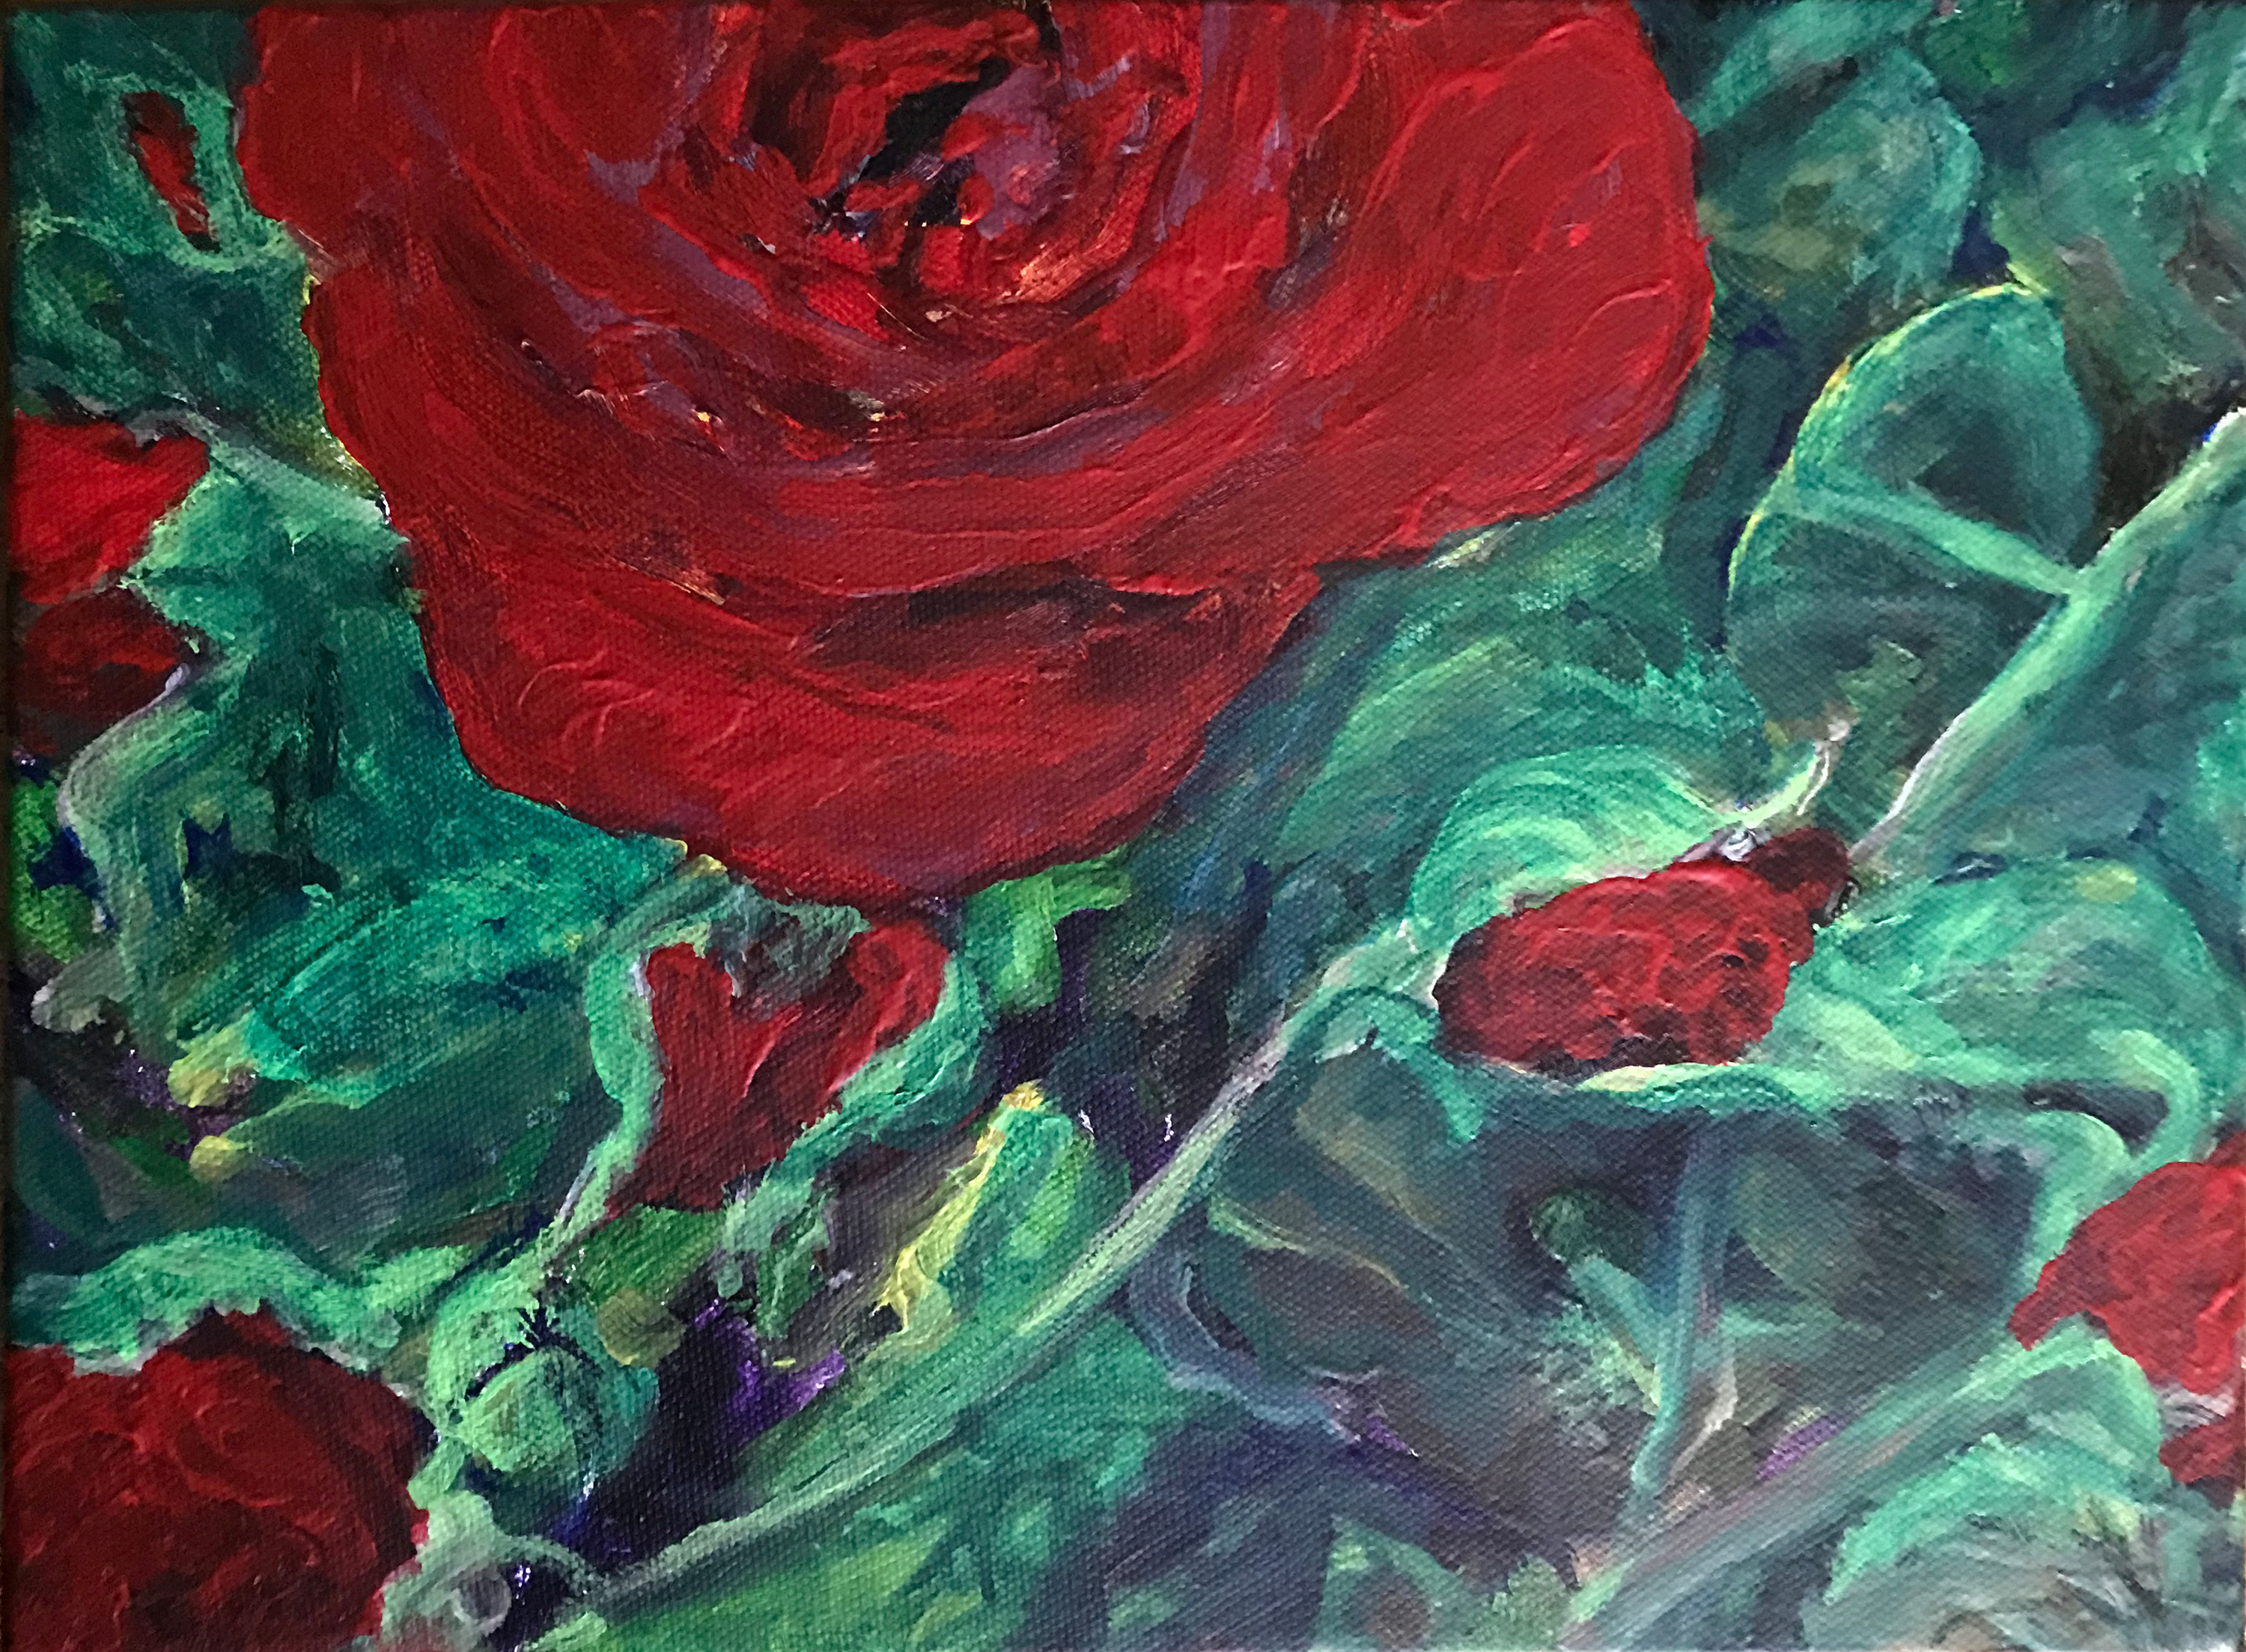 2018 12 29 roses a painting 29a acrylic 9x12 f4kfmi